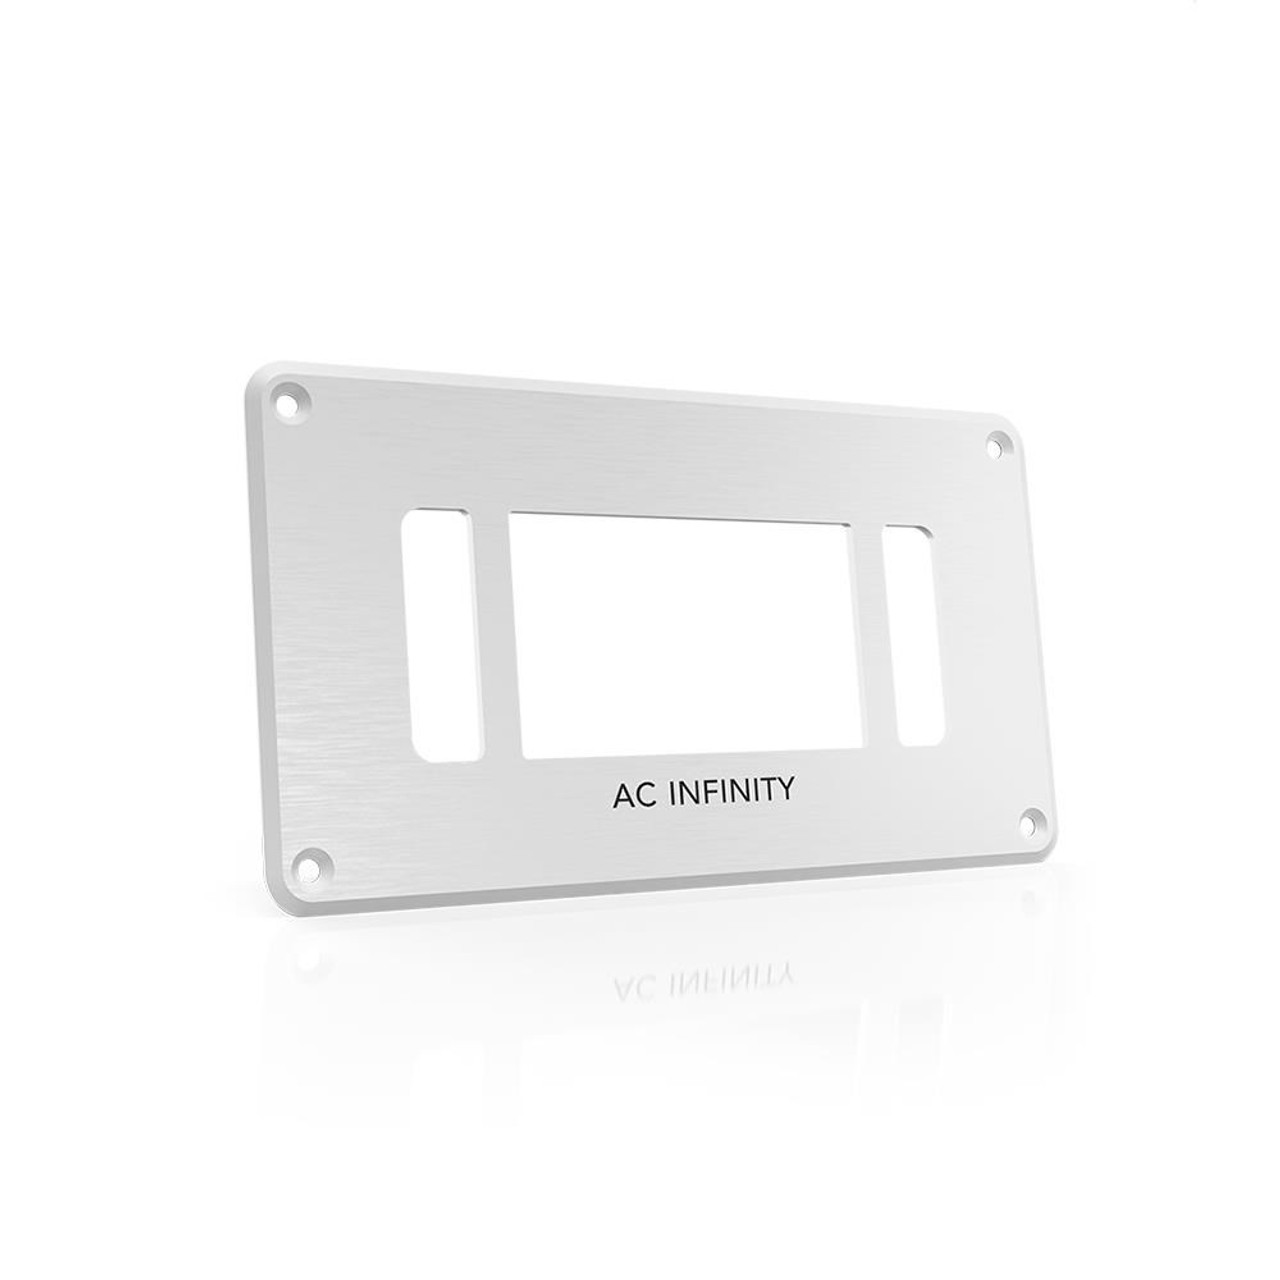 AC Infinity AP5TBKit Dual 80mm Airplate T5 AV Cabinet Cooling Fan Kit